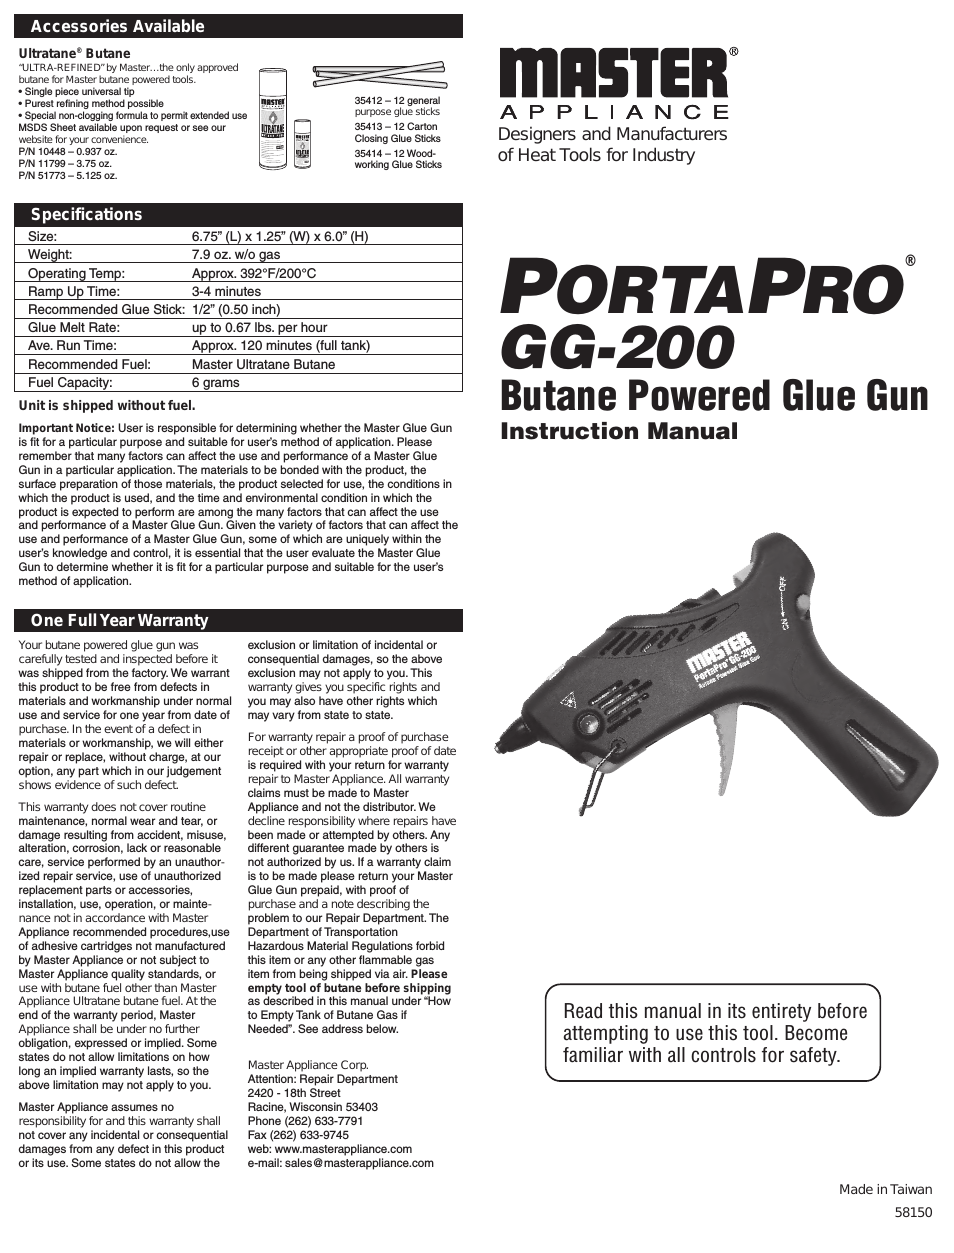 GG-200 PortaPro Glue Gun